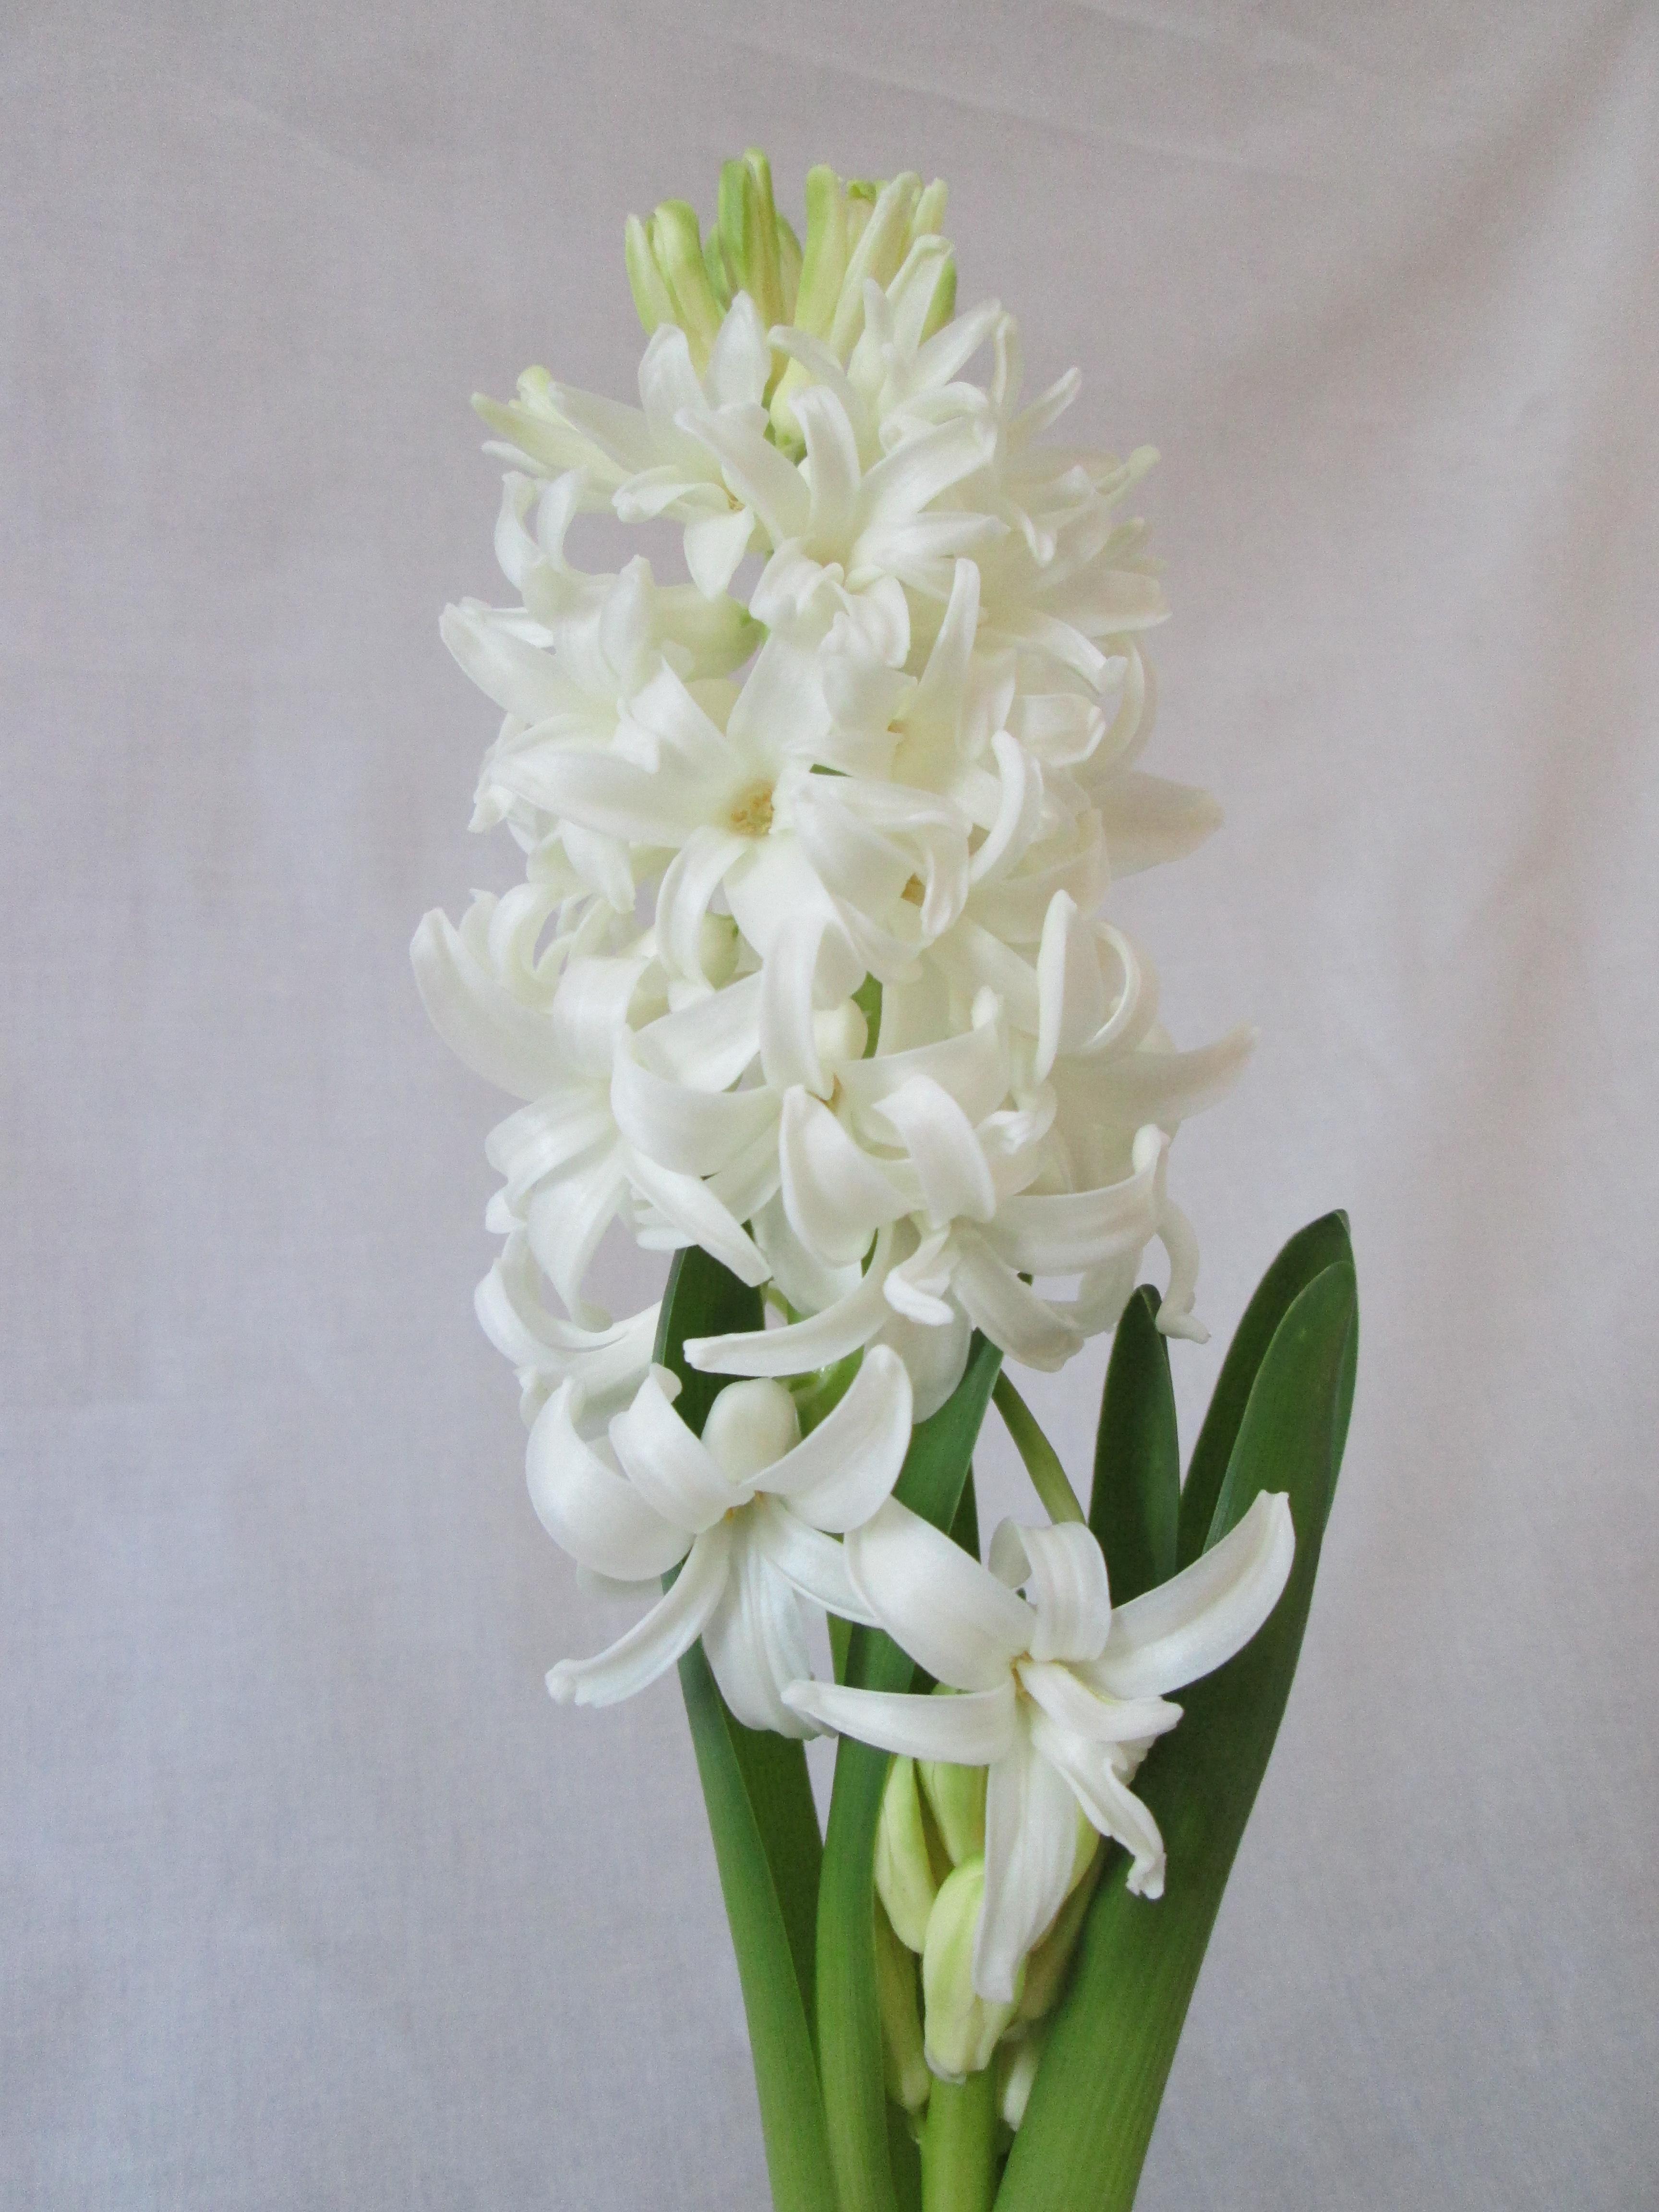 Hyacinth White Pearl from Leo Berbee Bulb Company